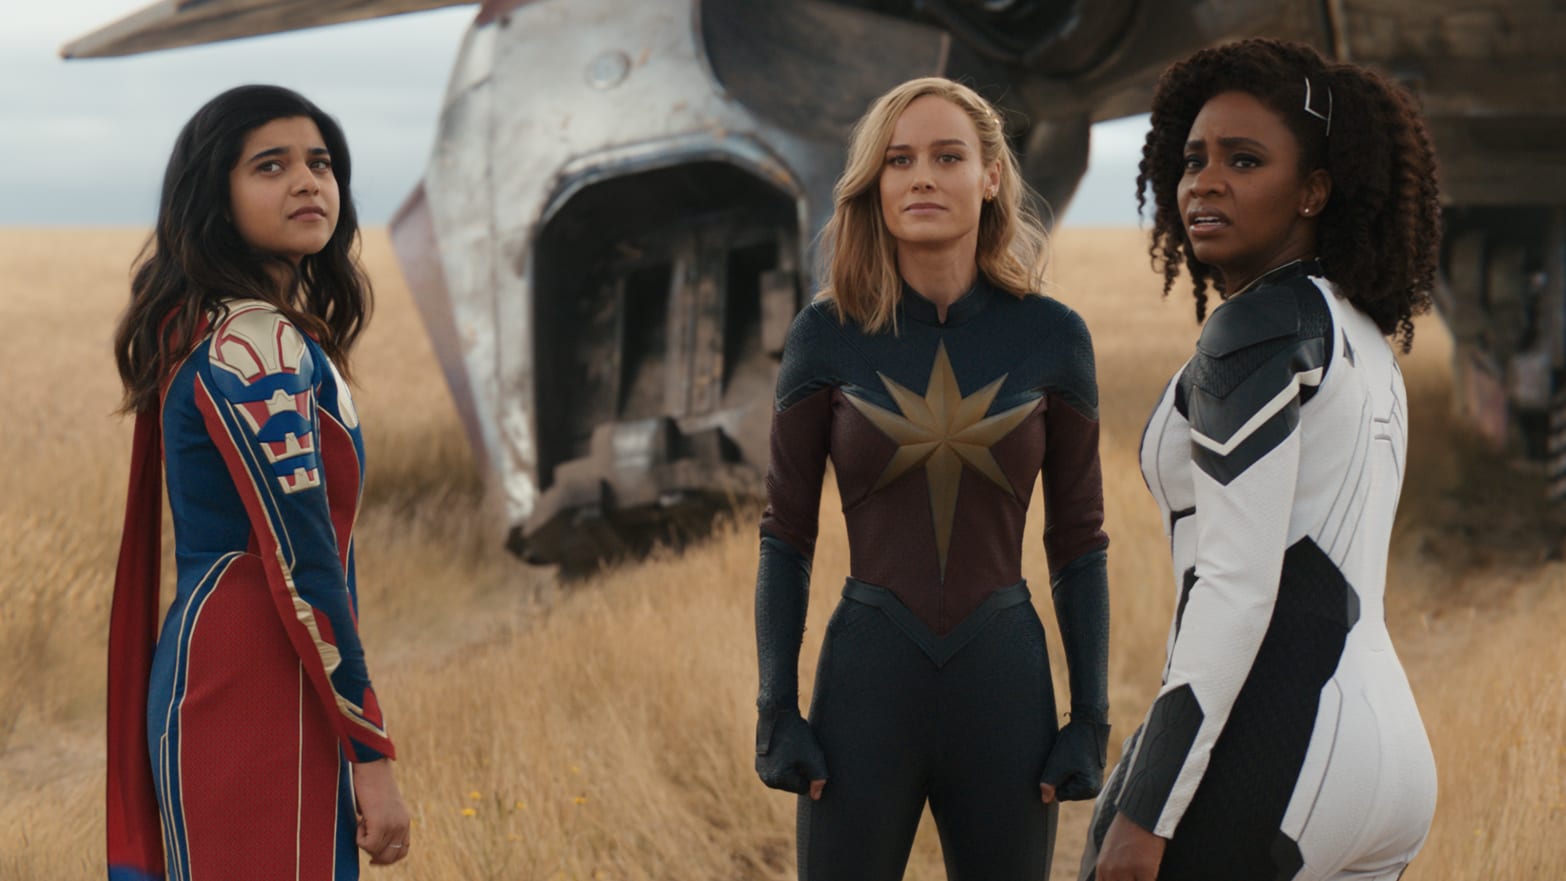 The Marvels' Post Credits Leak Confirms Major Marvel Superhero Team Up To  Replace Original Avengers - FandomWire